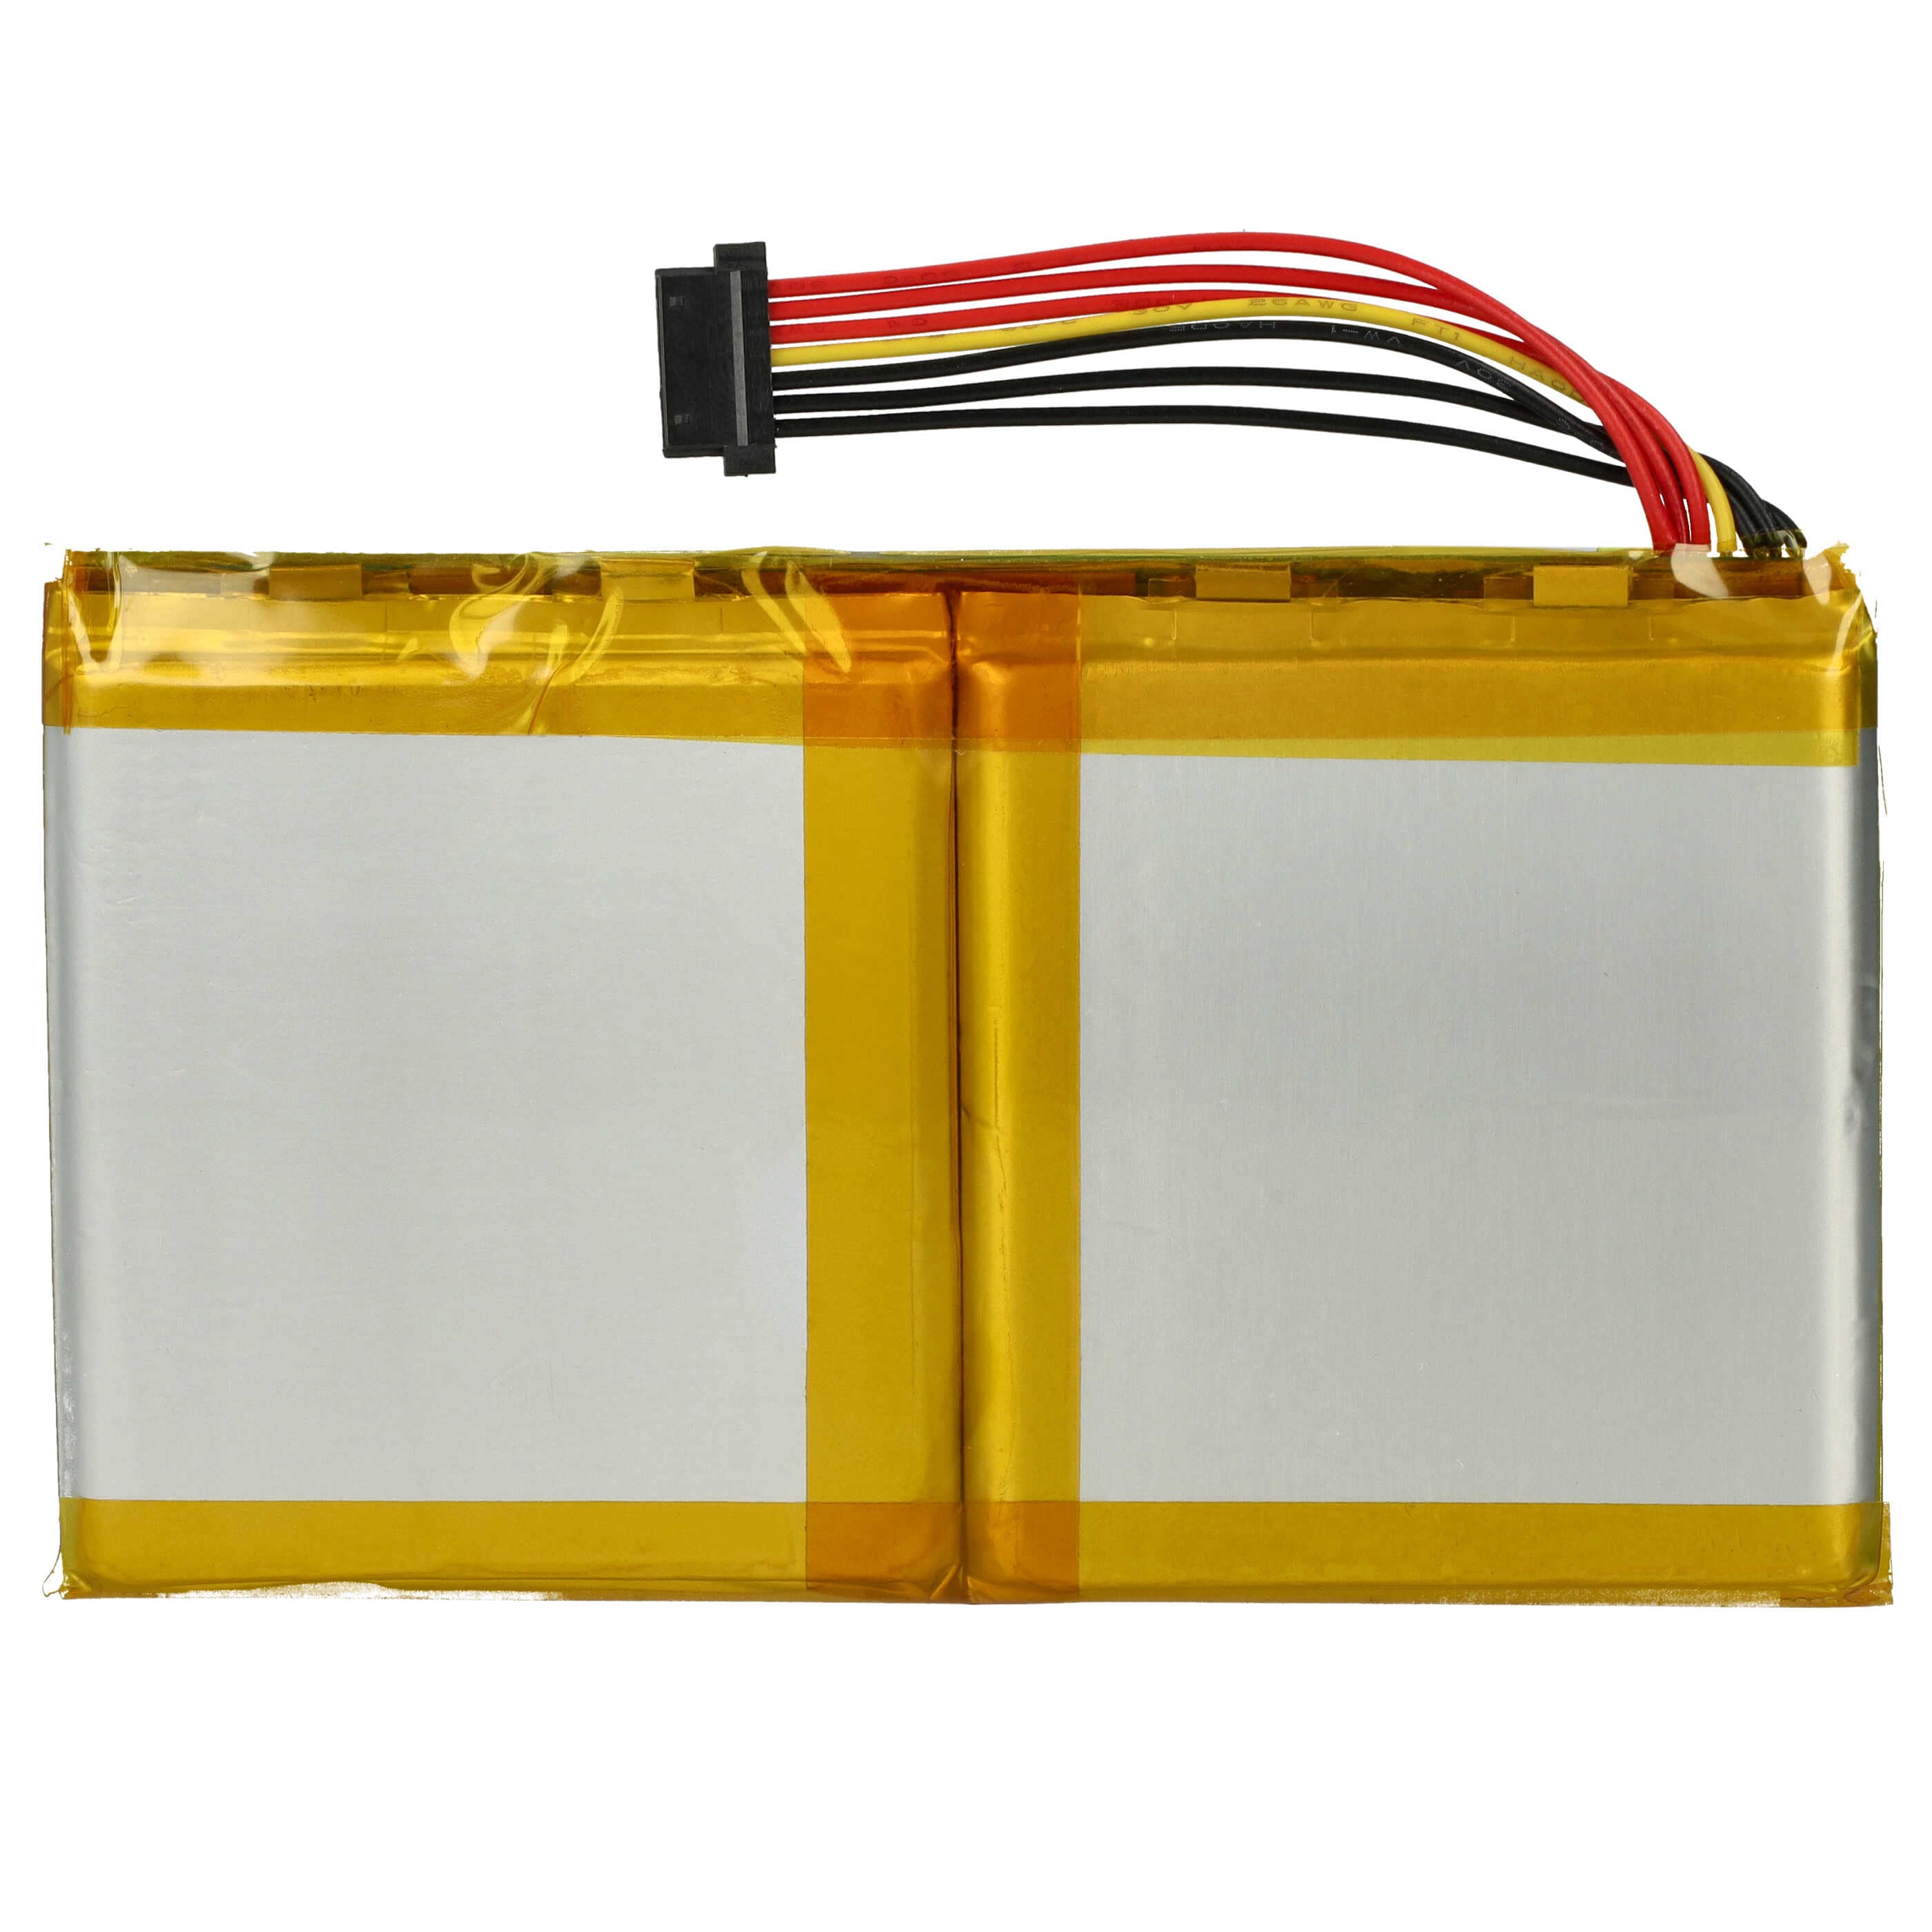 Battery Replacement for Polaroid FT605056P-2S - 2000mAh, 7.4V, Li-polymer